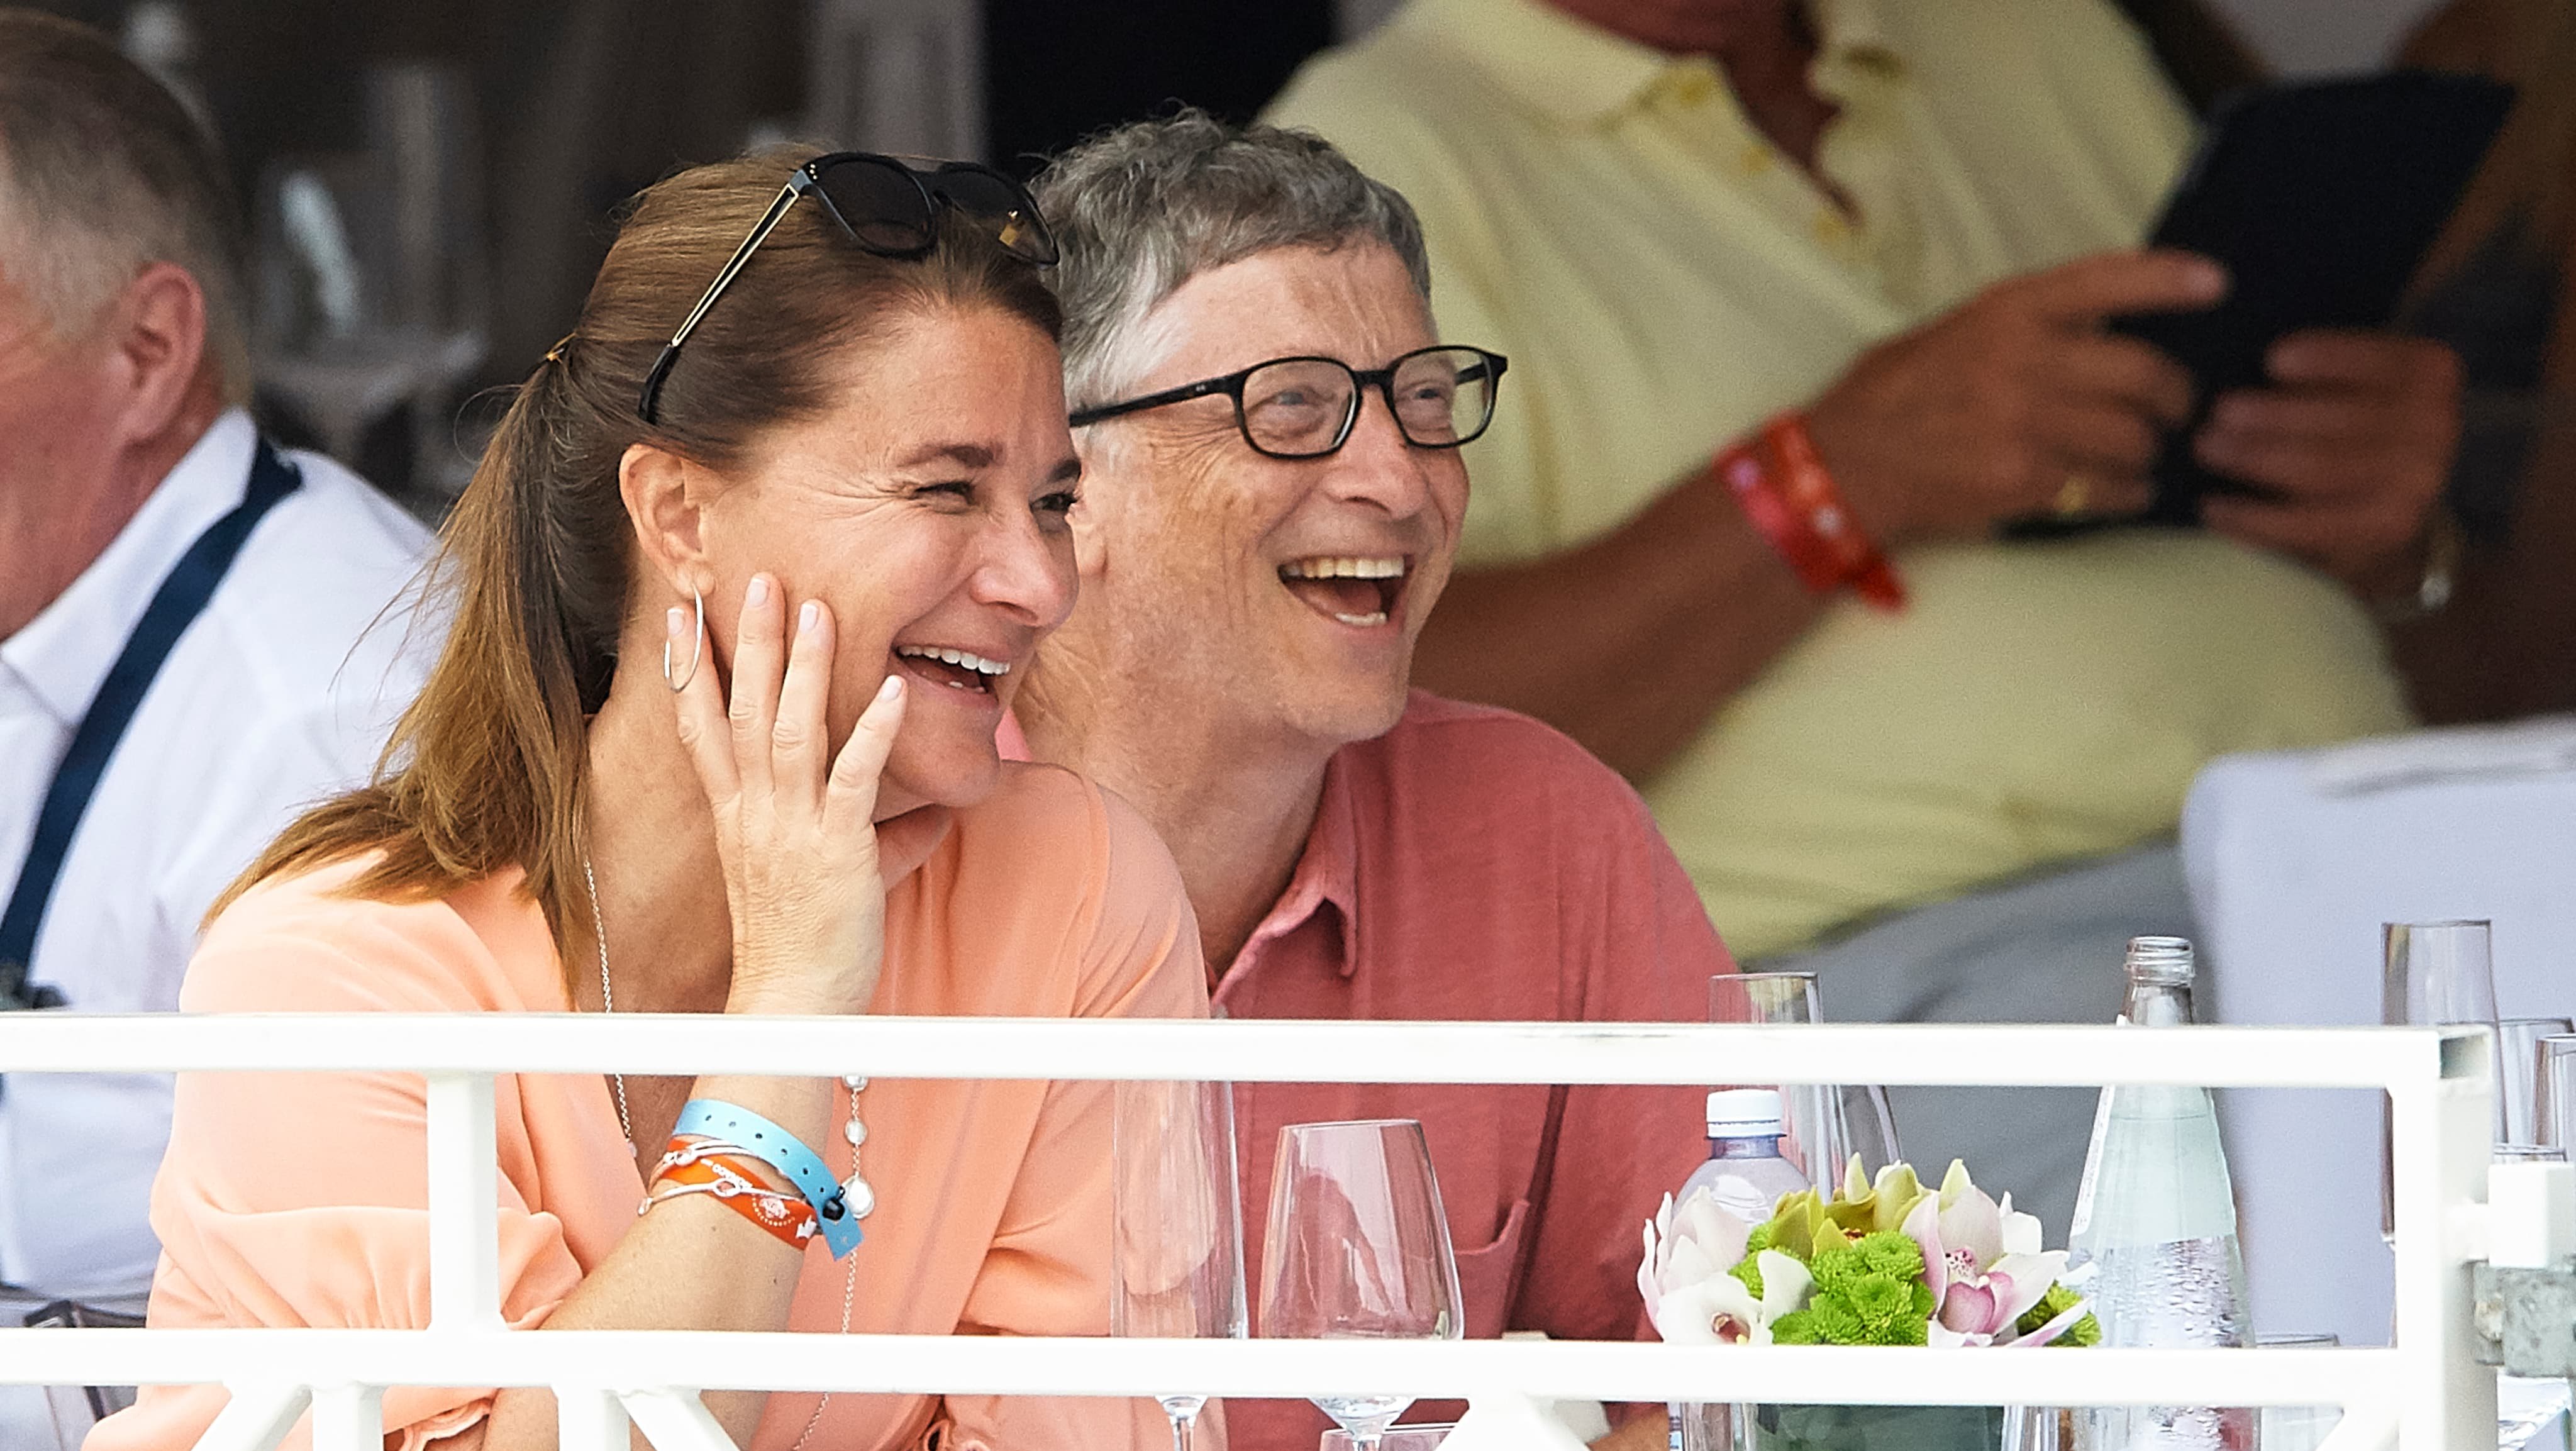 Жена билла гейтса. Билл Гейтс с женой. Билл Гейтс и Мелинда. Жена Билла Гейтса Мелинда. Билл Гейтс и Мелинда фото.